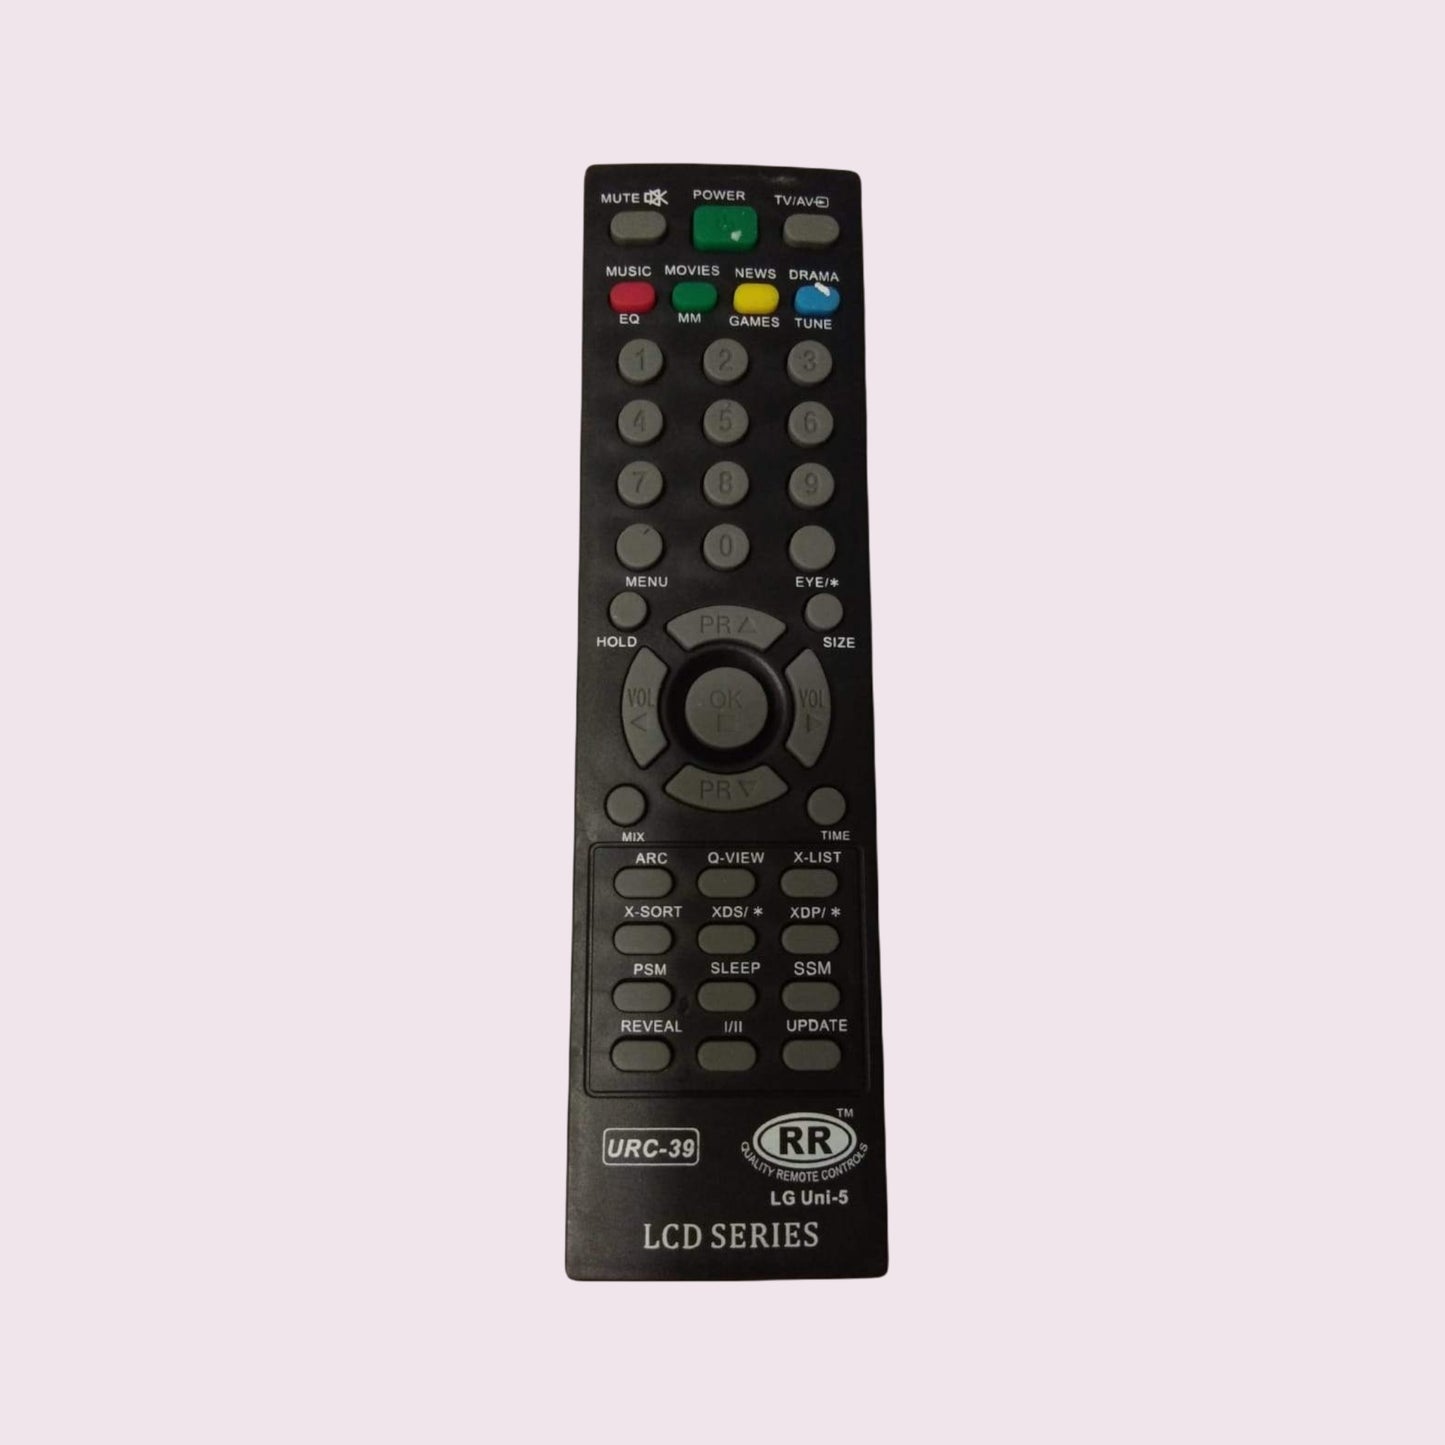 LG LED TV Universal Remote Controller 39 (LD 05)